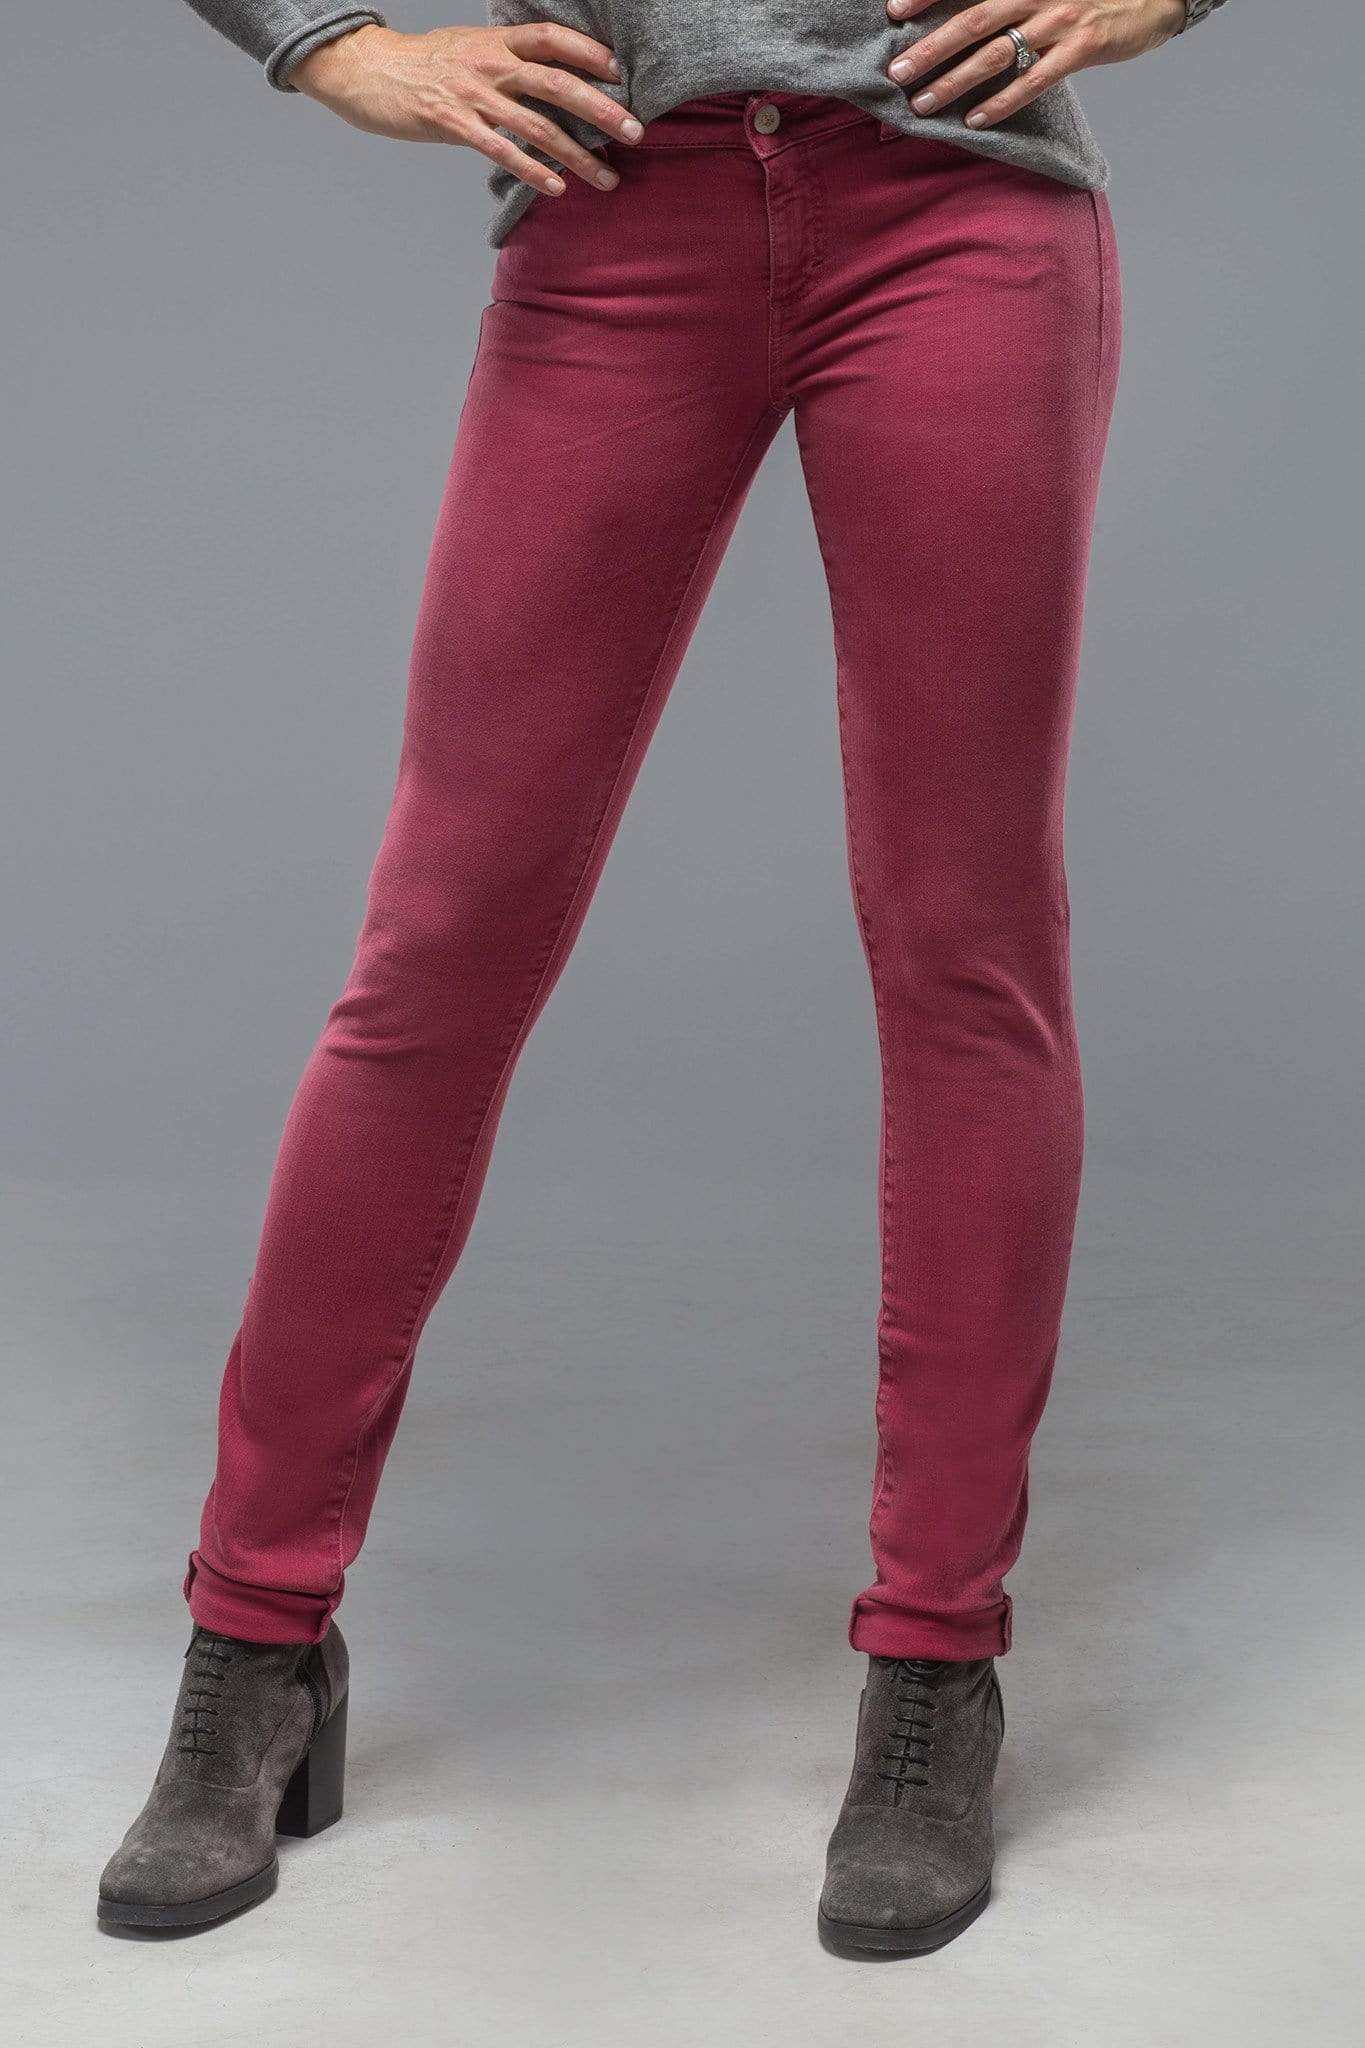 Women's Jeans Jeggings Five Pocket Stretch Denim Pants (Red, Large